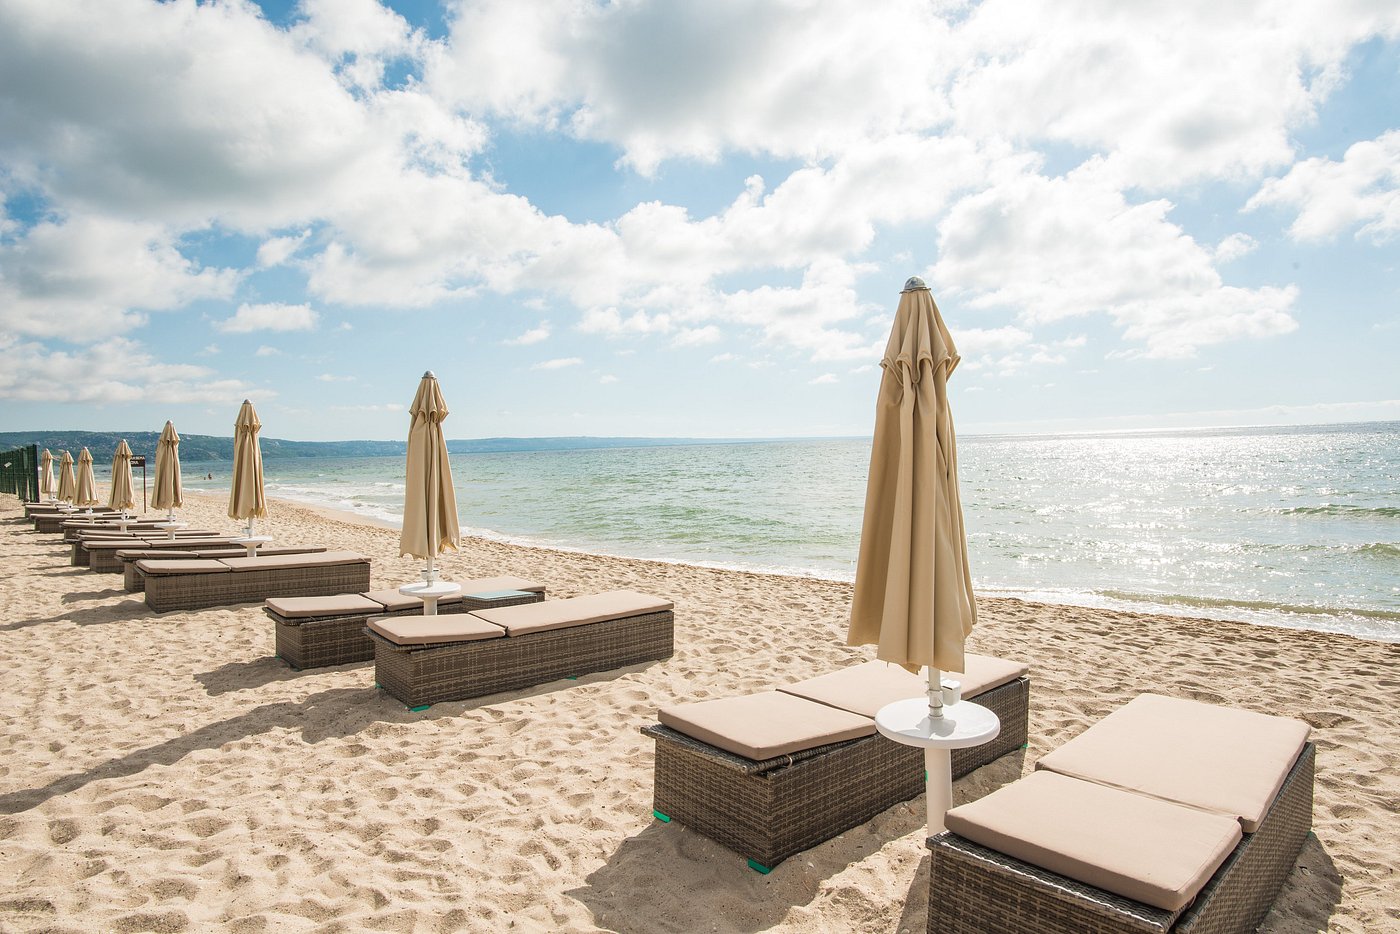 Effect Algara Beach Club Hotel Pool Pictures & Reviews - Tripadvisor